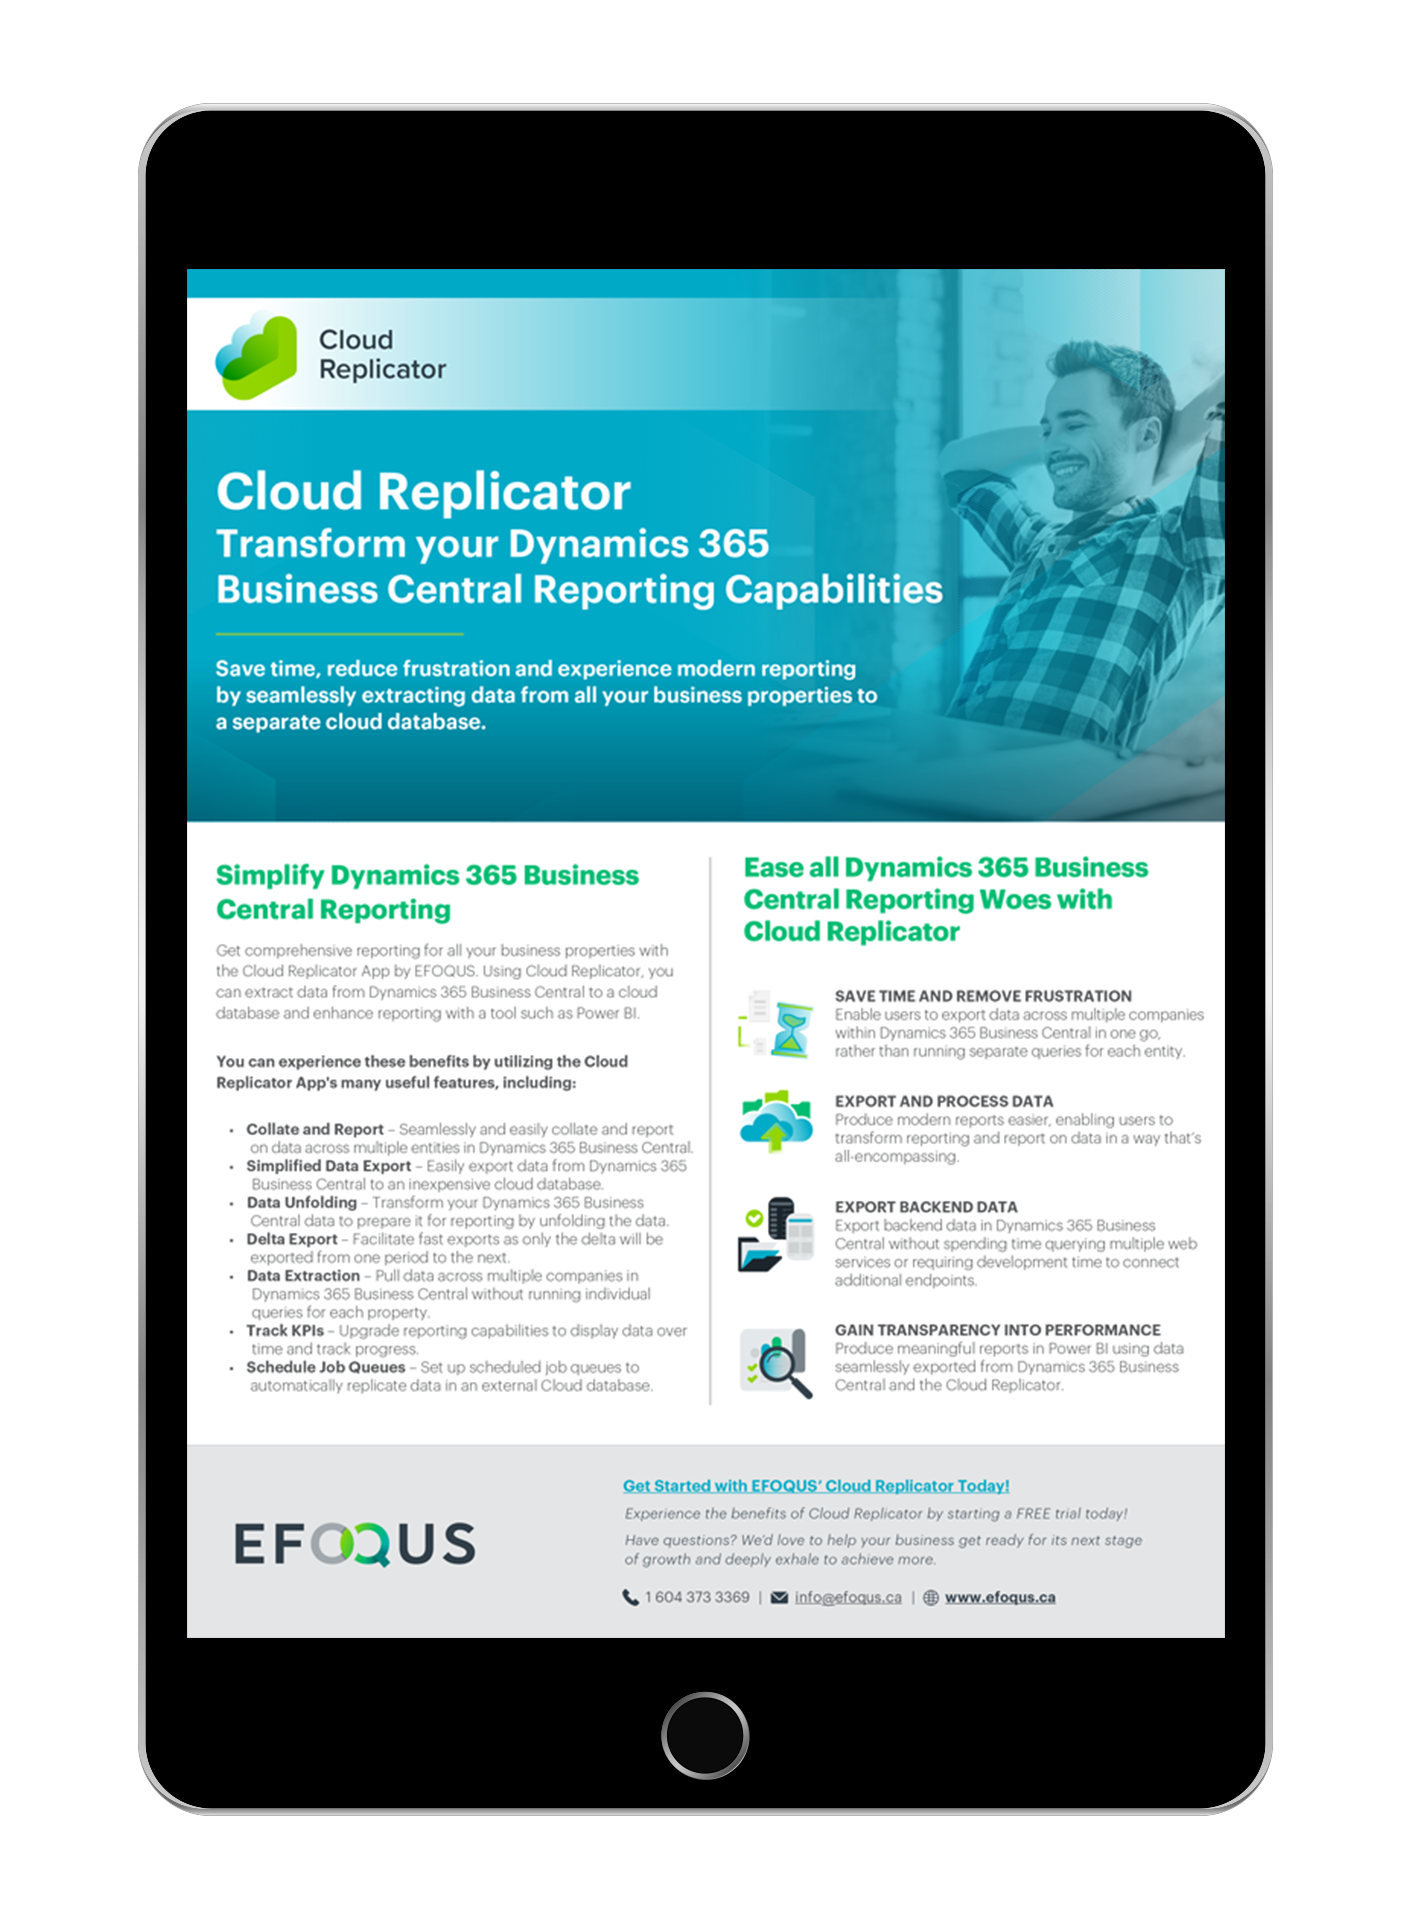 EFOQUS - cloud replicator guide - microsoft dynamics 365 business central resource